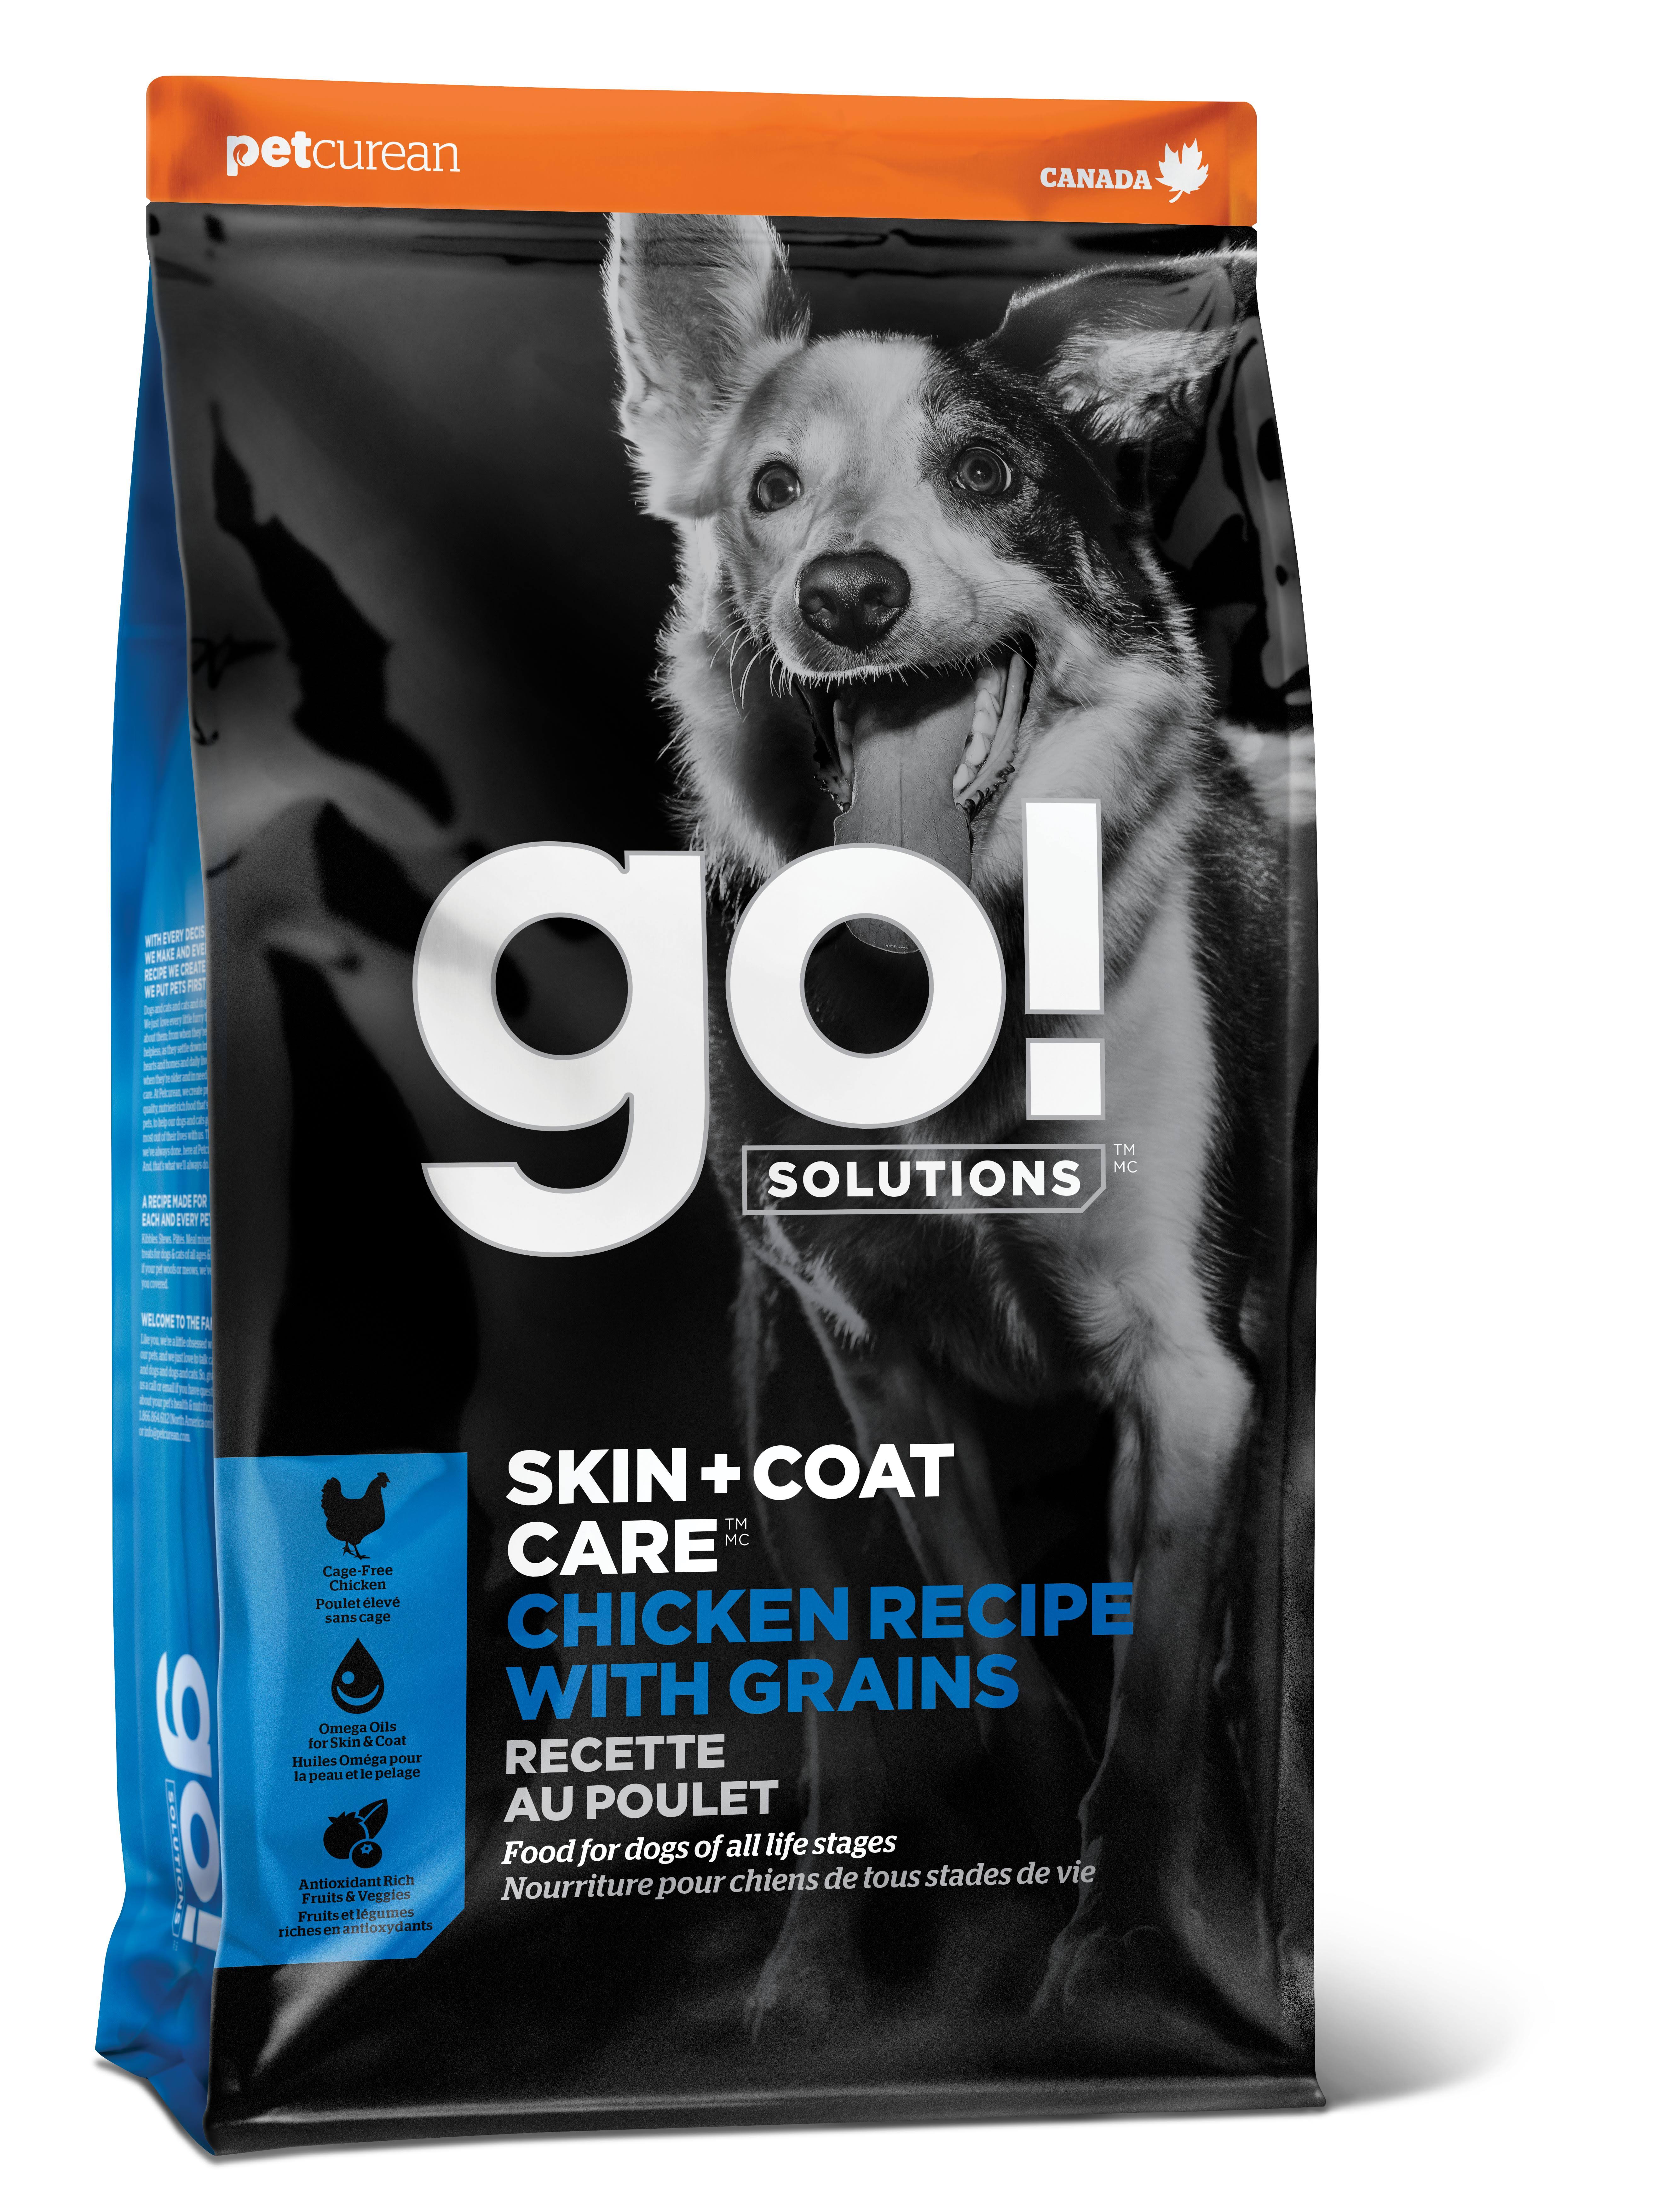 Go! Solutions Skin + Coat Care Chicken Dog Food [3.5lb]